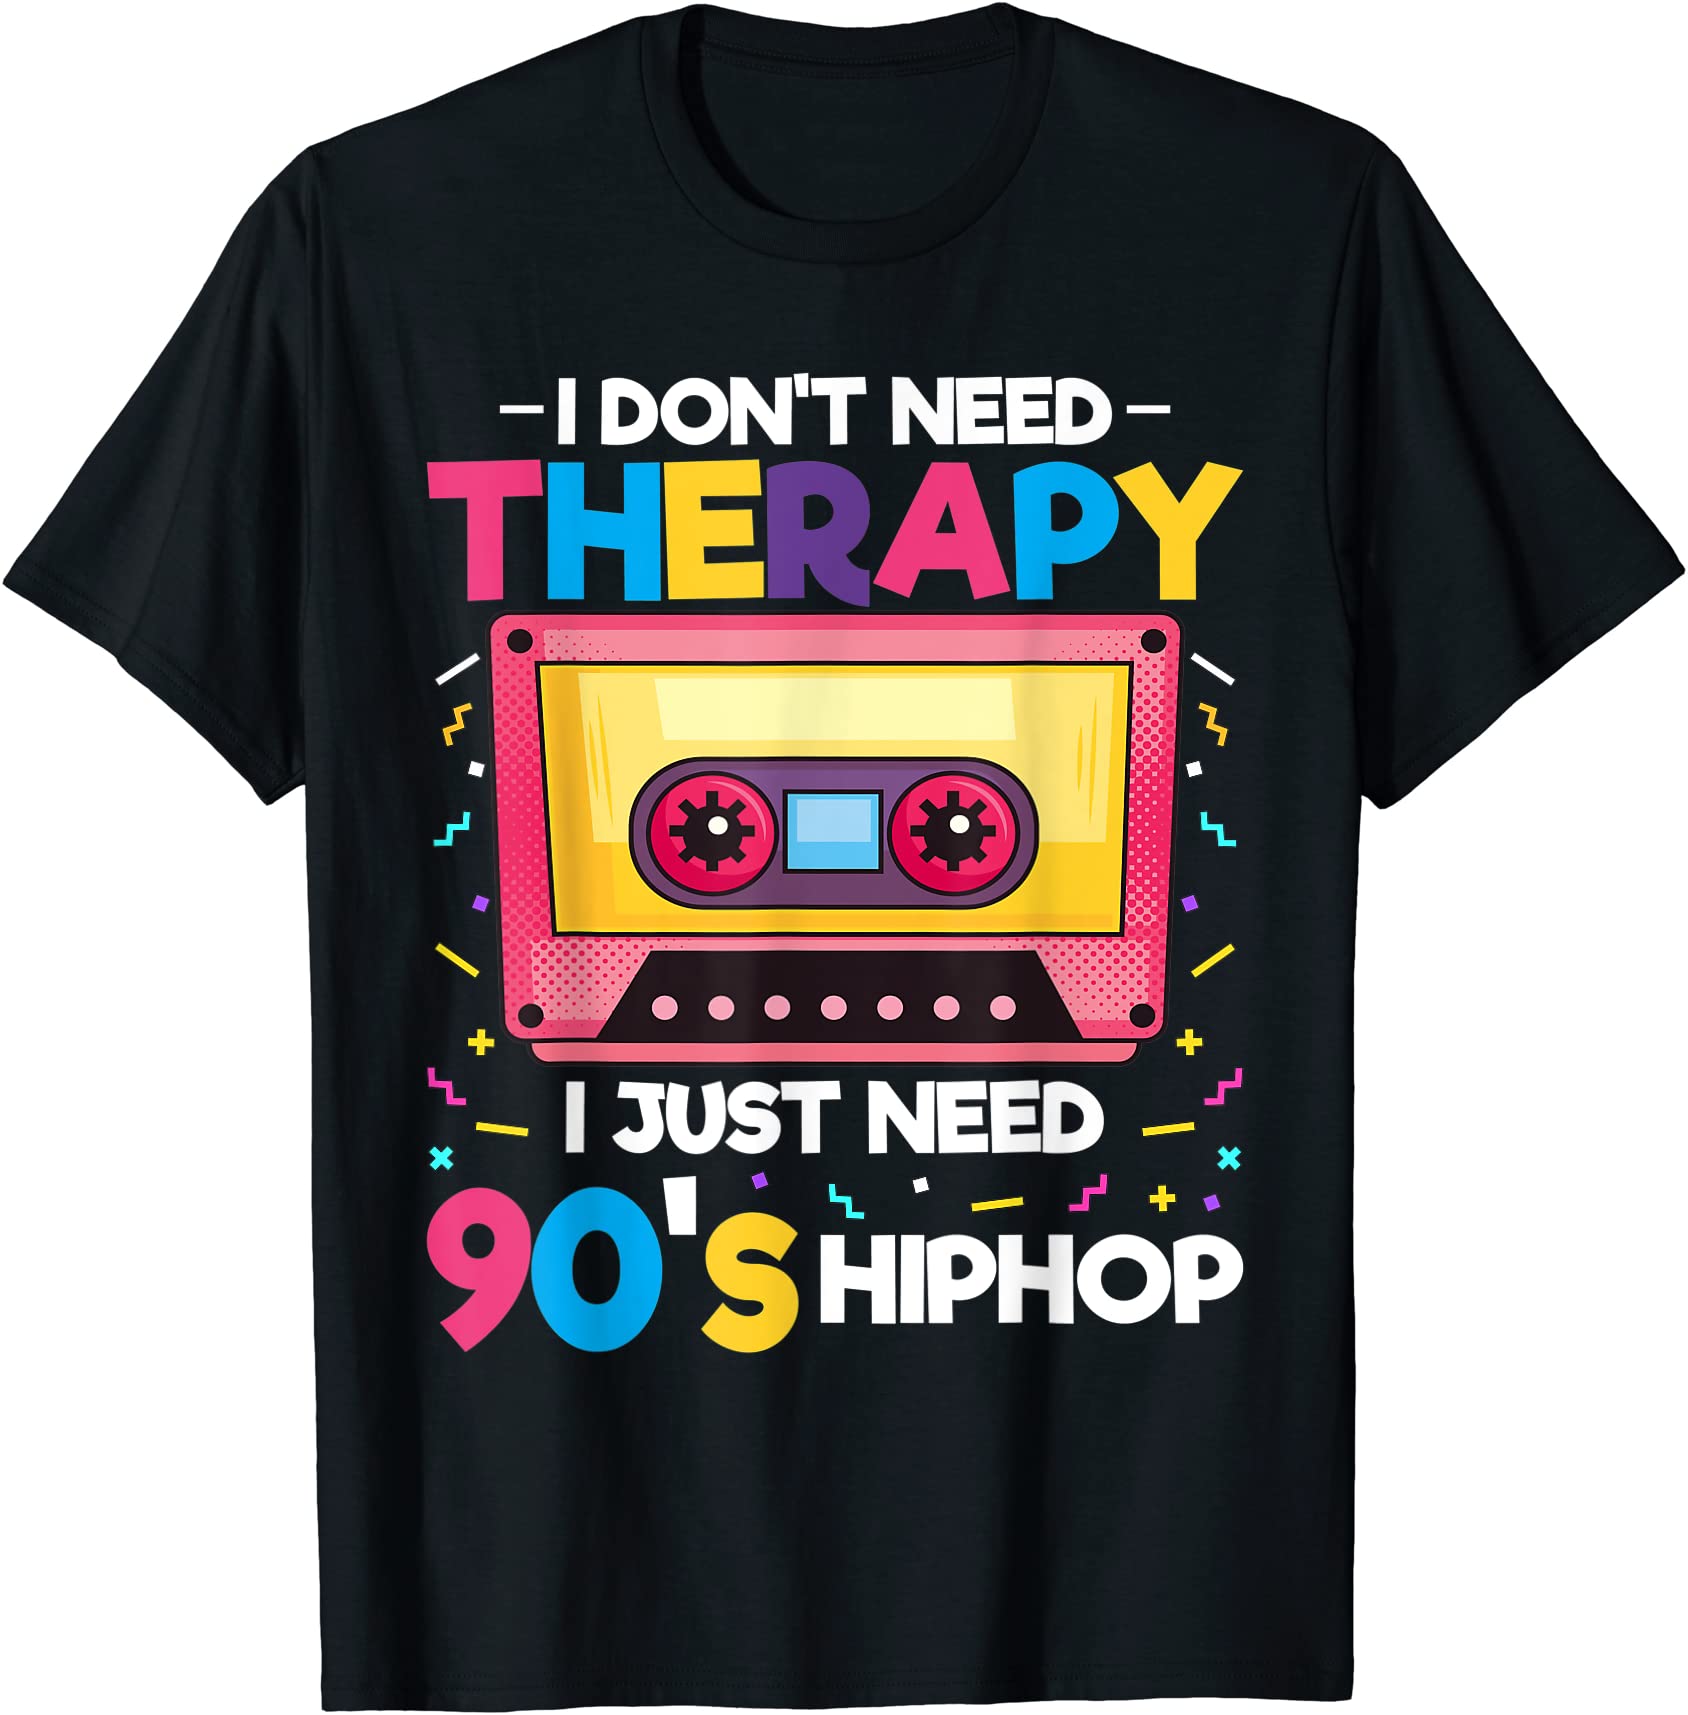 90s hip hop rap music nostalgia old school clothing gangster t shirt ...